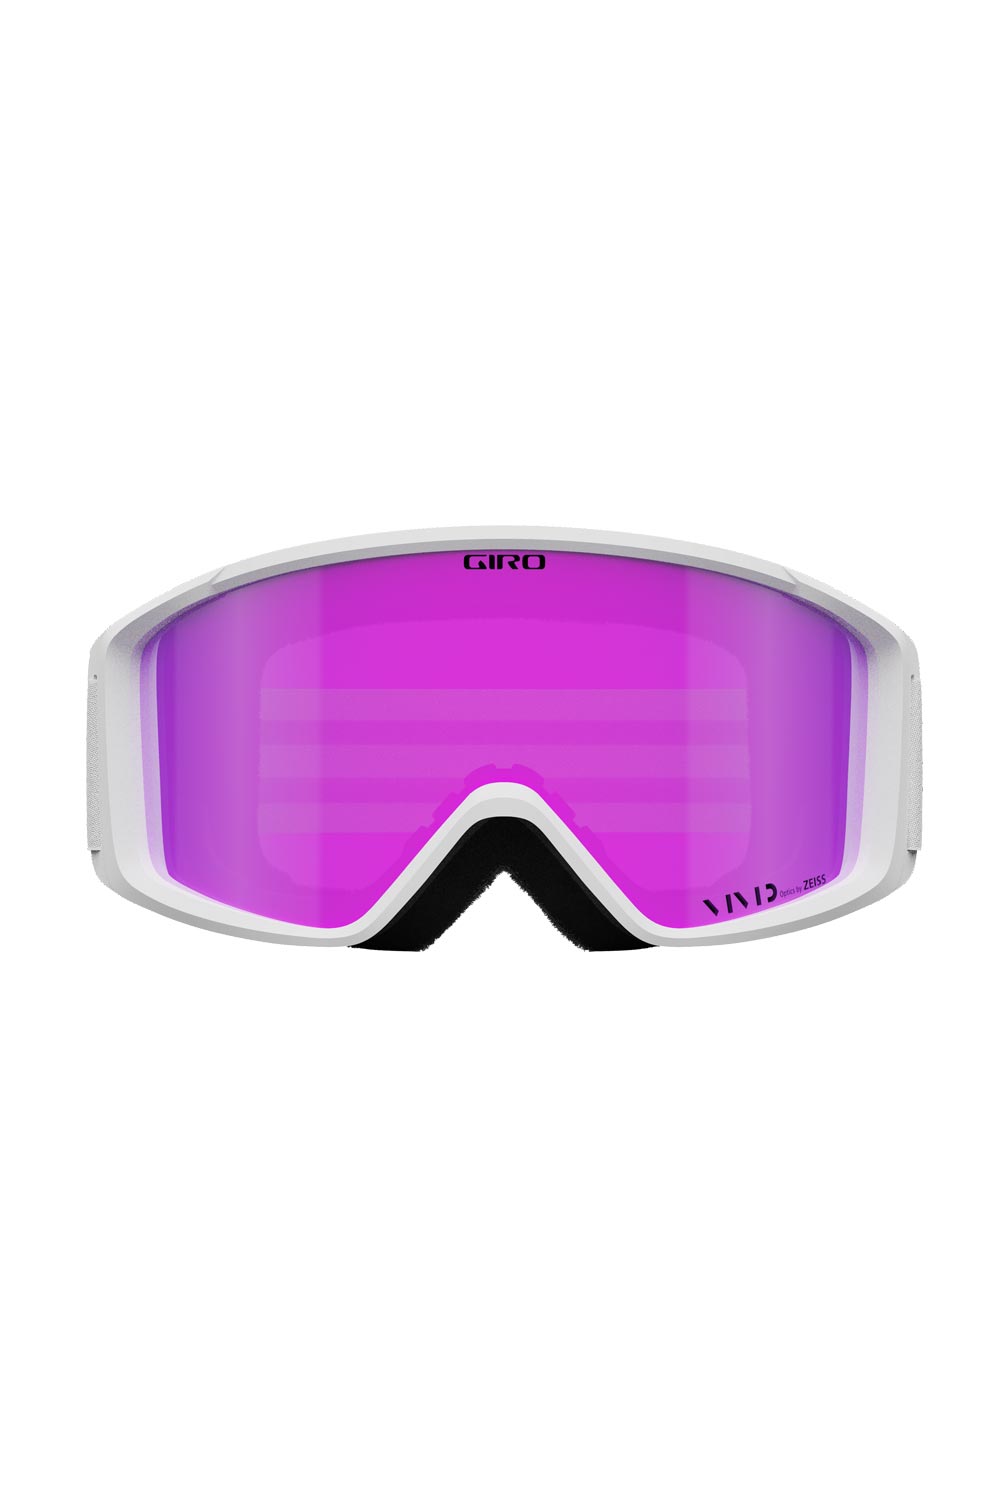 Giro Index 2.0 Goggles